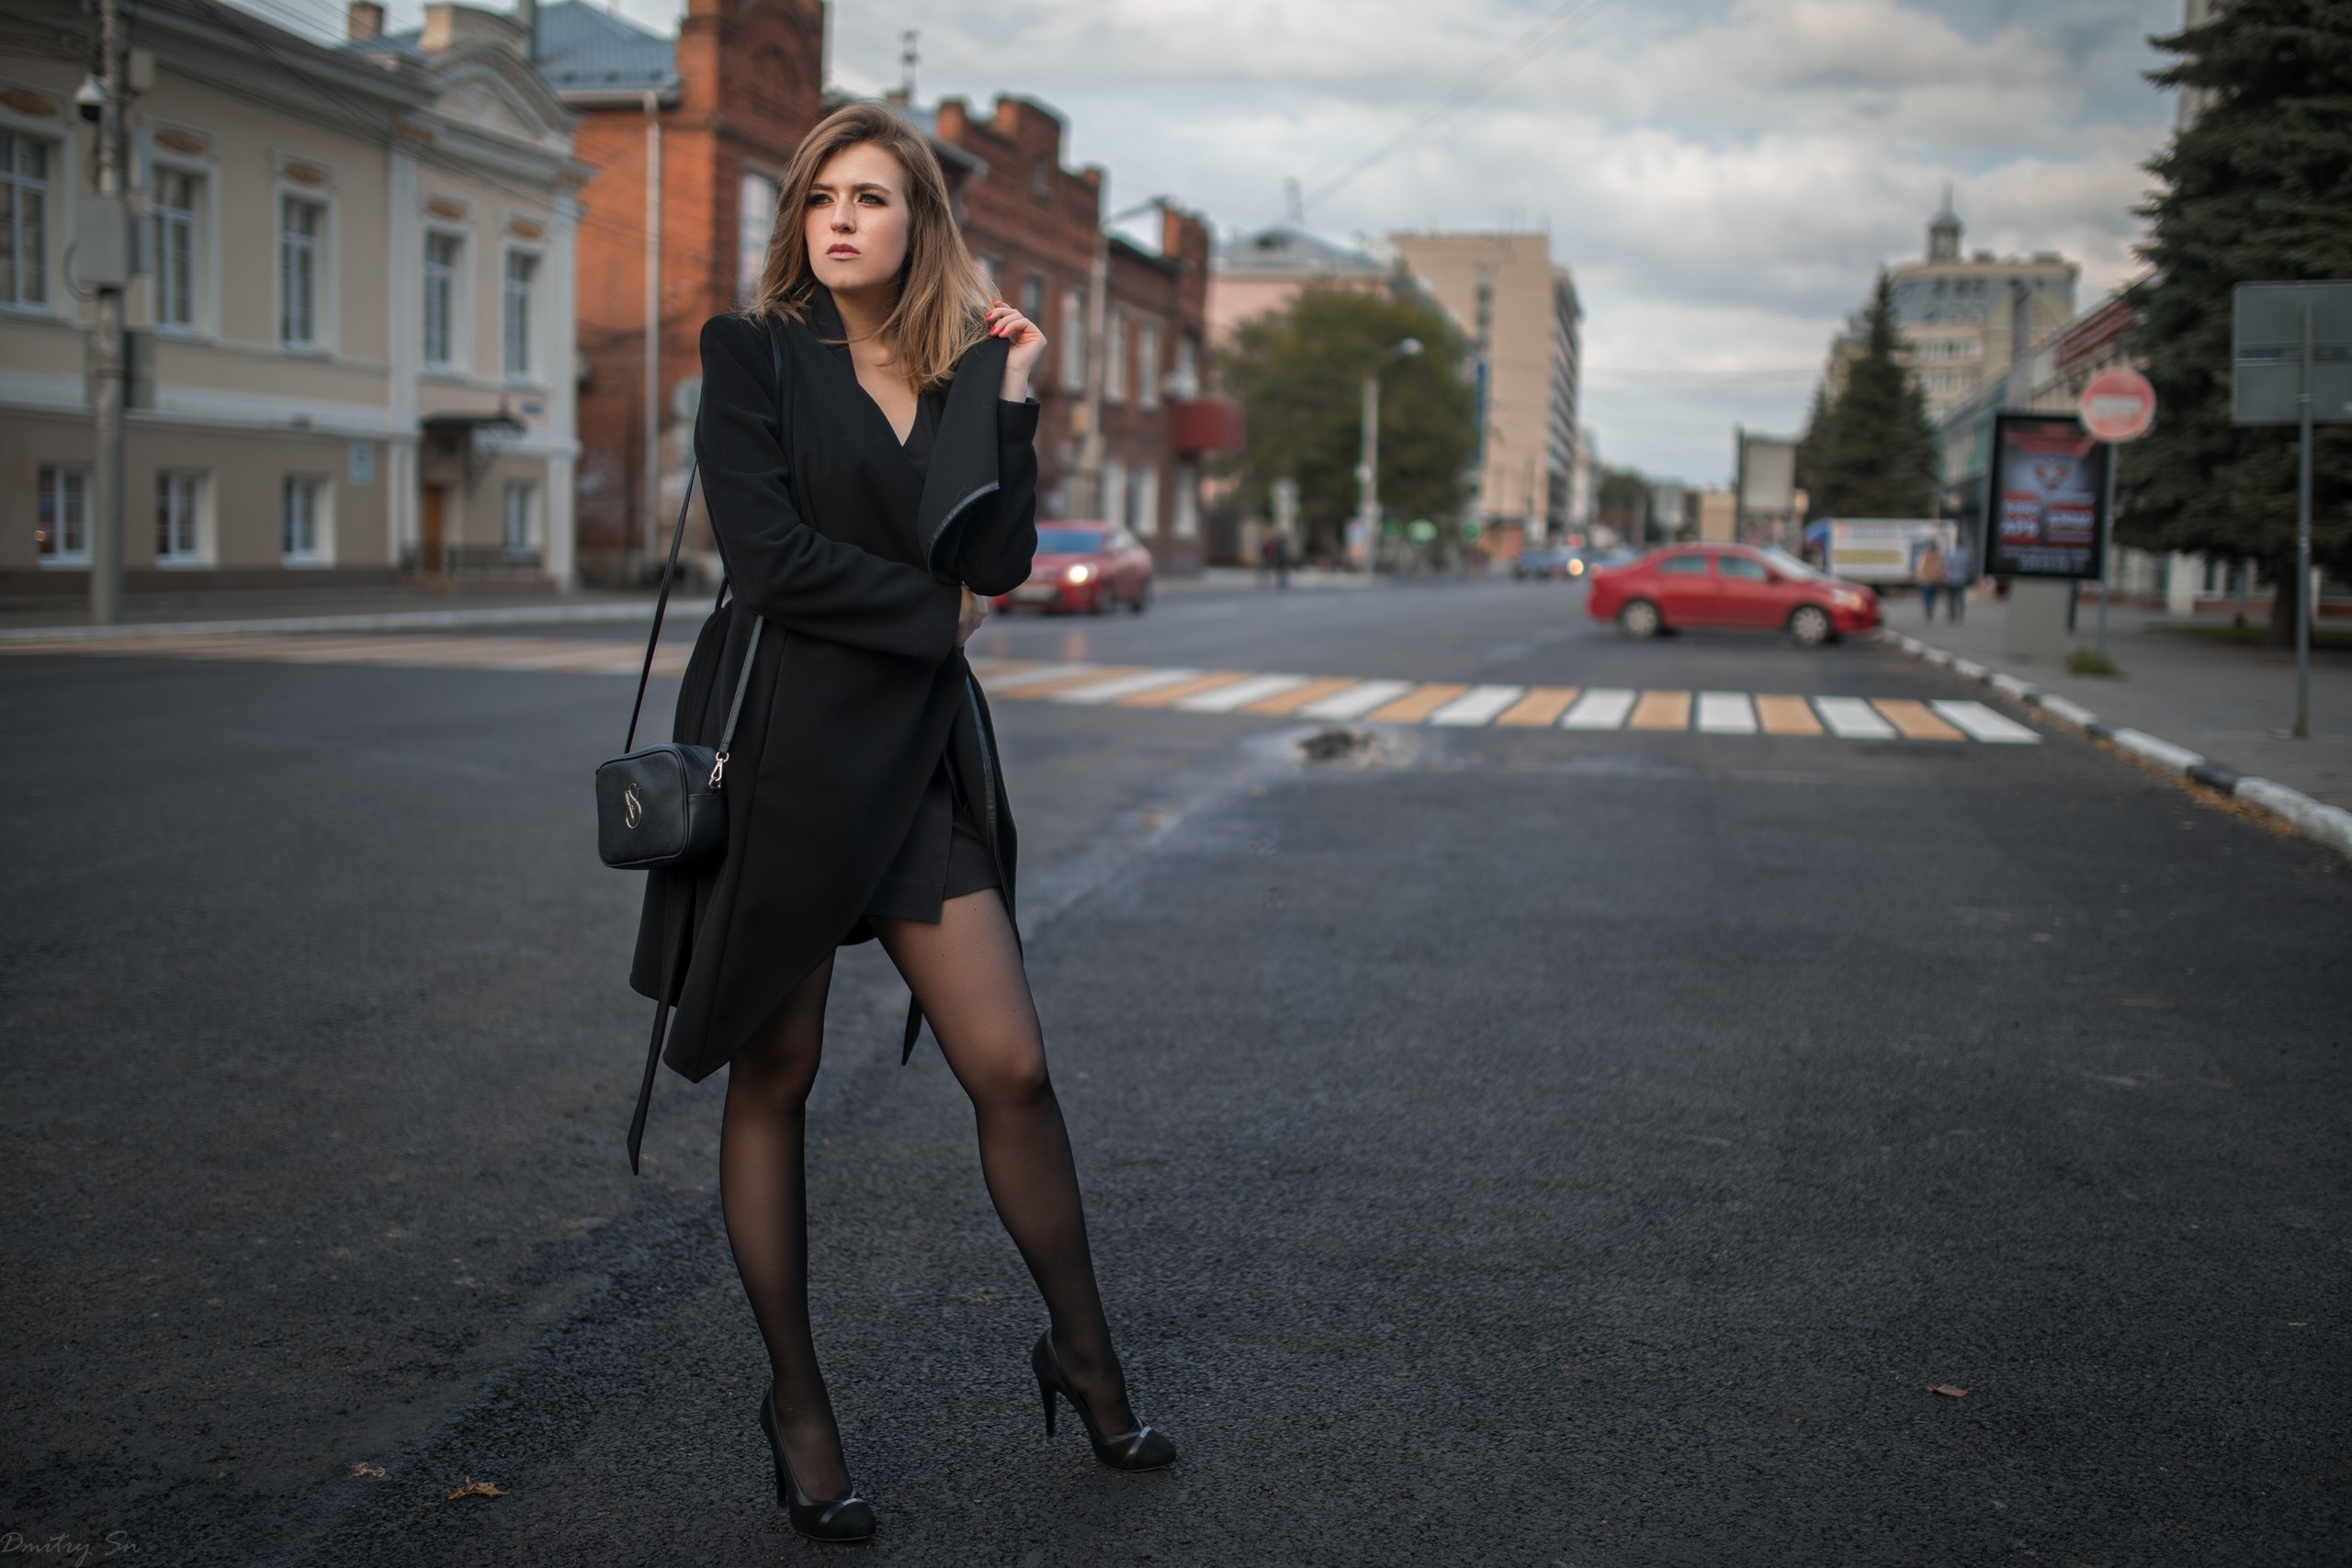 Dmitry Shulgin Urban City Women Outdoors Women Black Coat Standing Public Veronica Dmitry Sn Street  2560x1707